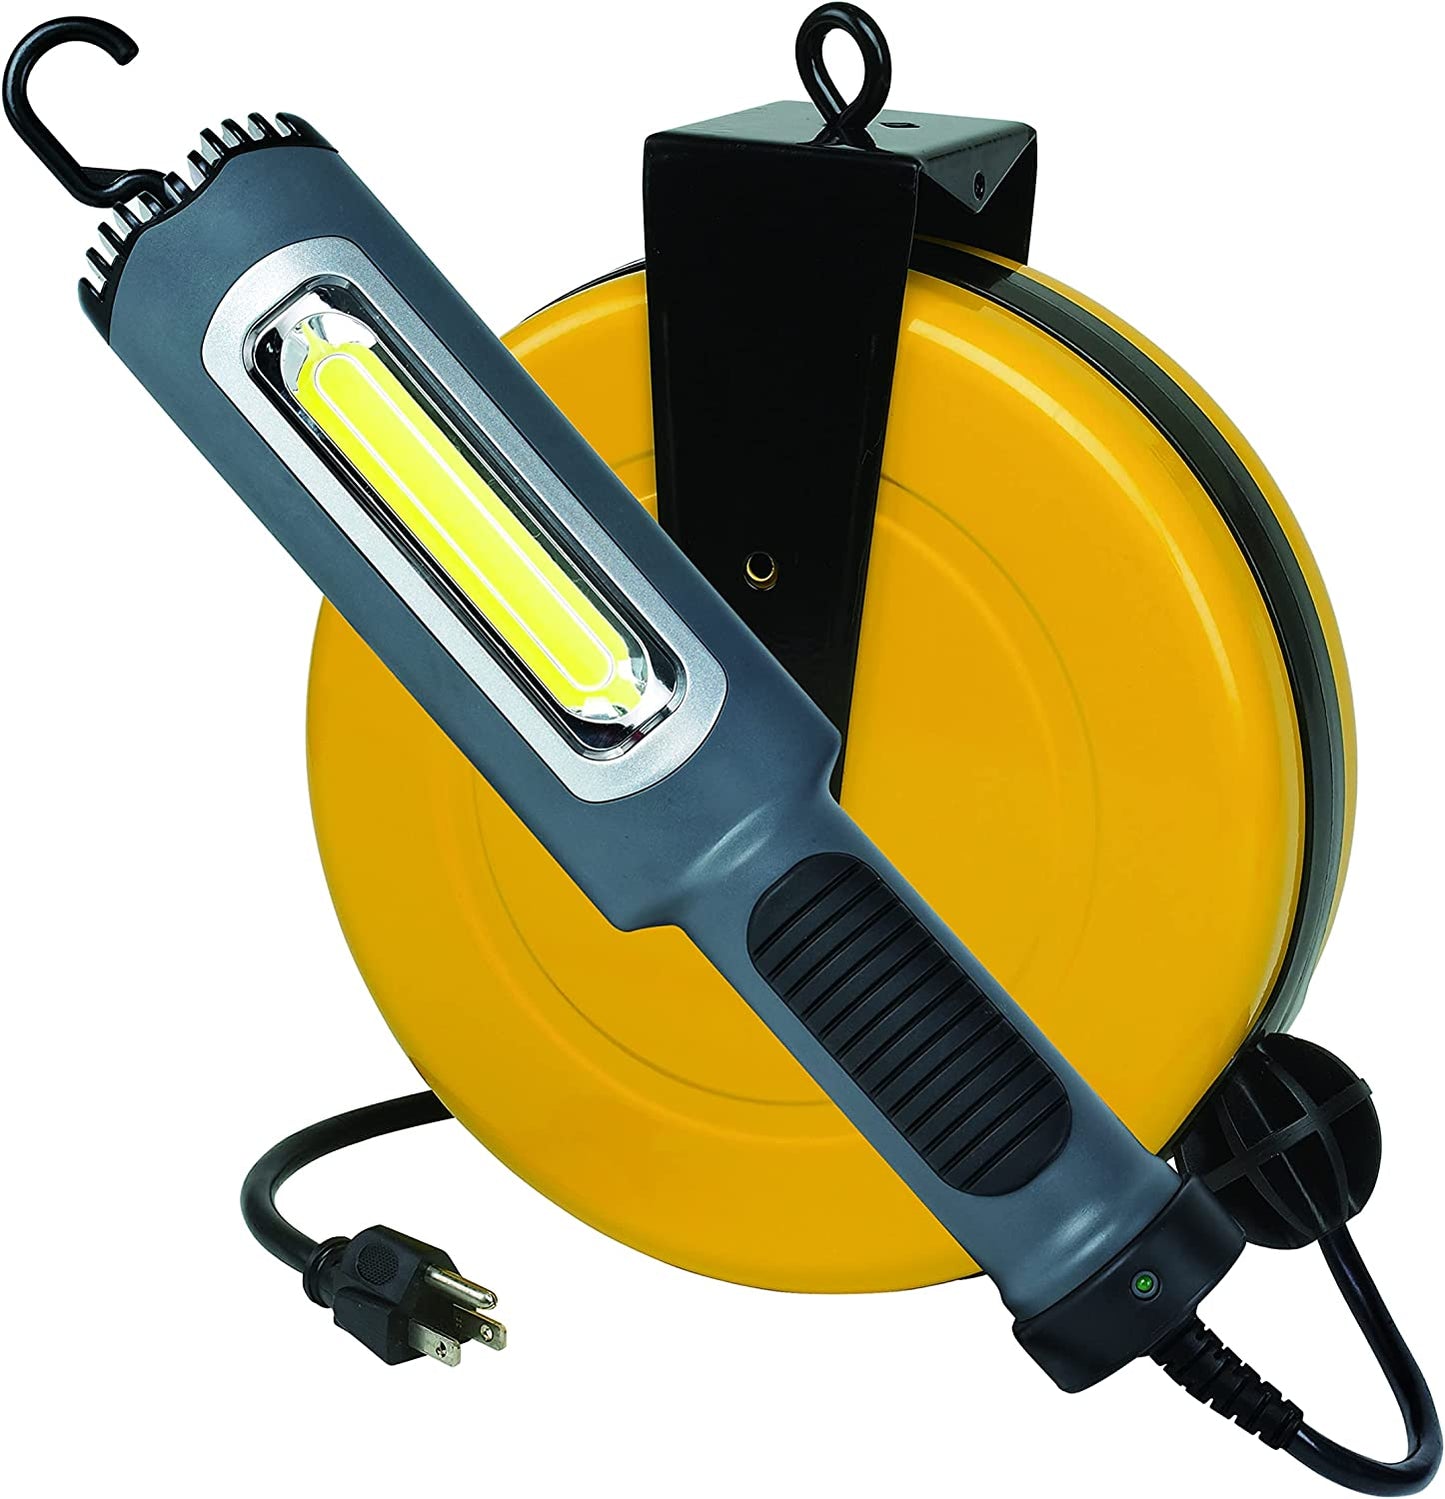 Professional Auto Repair Drop Lighting 8 Watt Bright 900 Lumen COB LED Cord Reel Garage Shop Work Light - E.S.N Tools